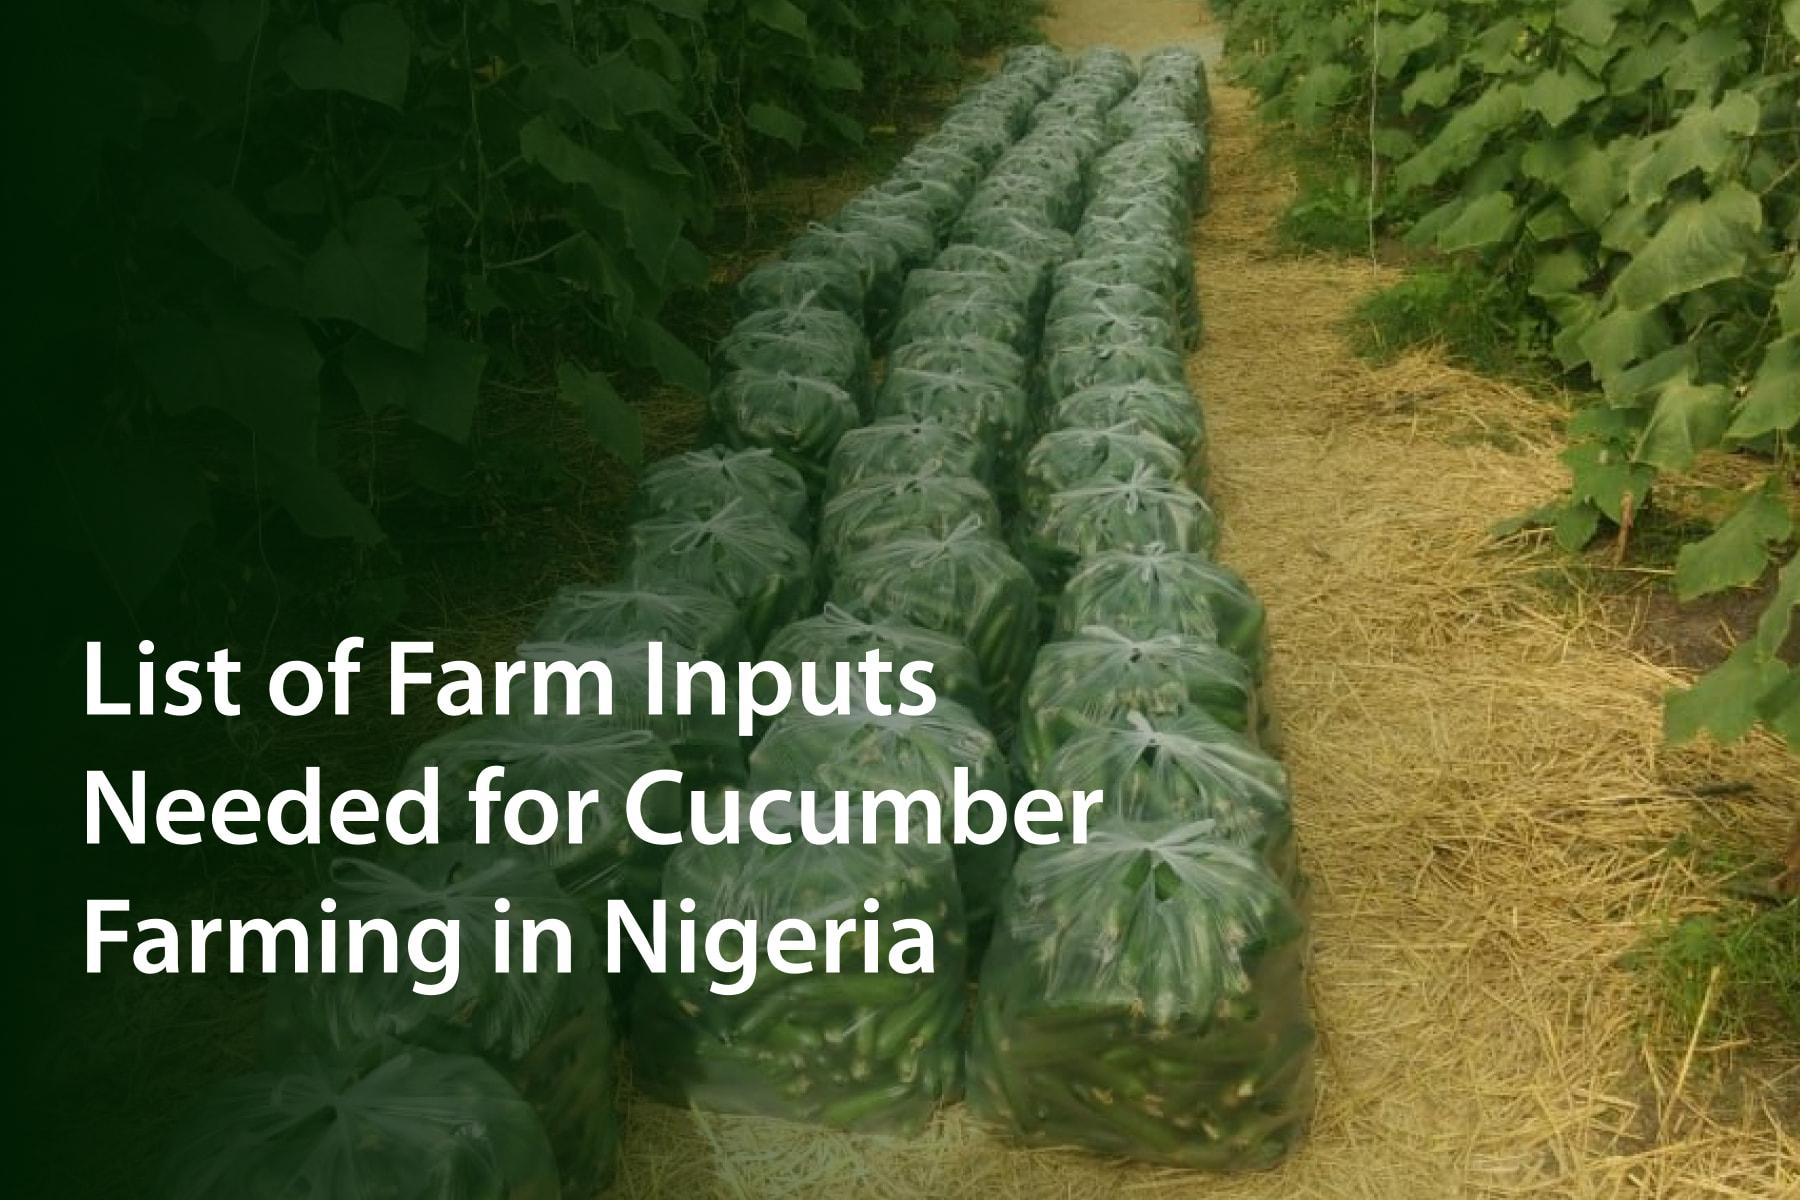 List of Farm Inputs Needed for Cucumber Farming in Nigeria